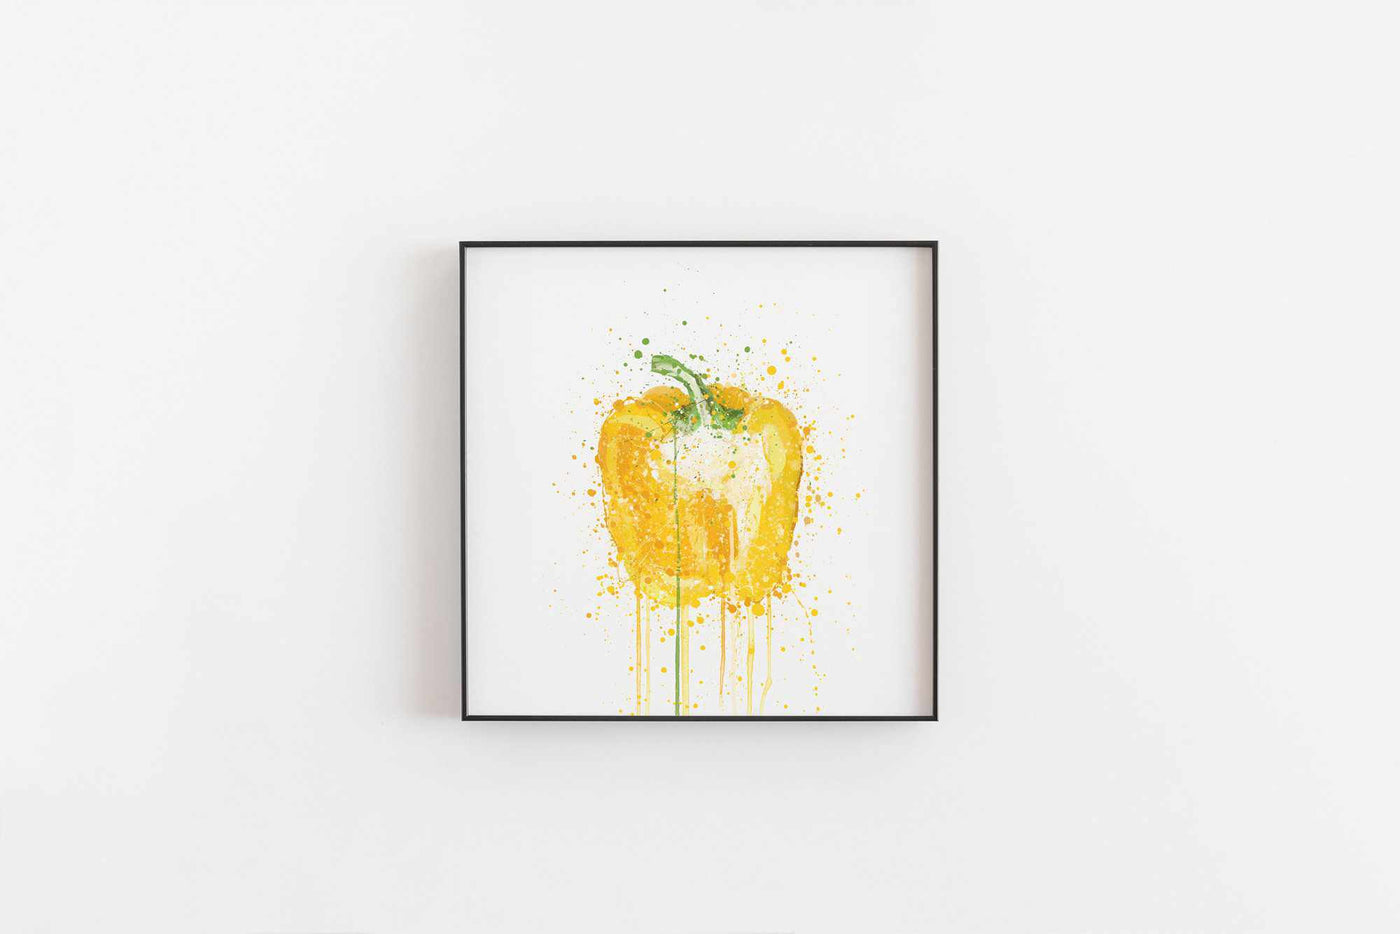 Yellow Pepper Vegetable Wall Art Print-We Love Prints